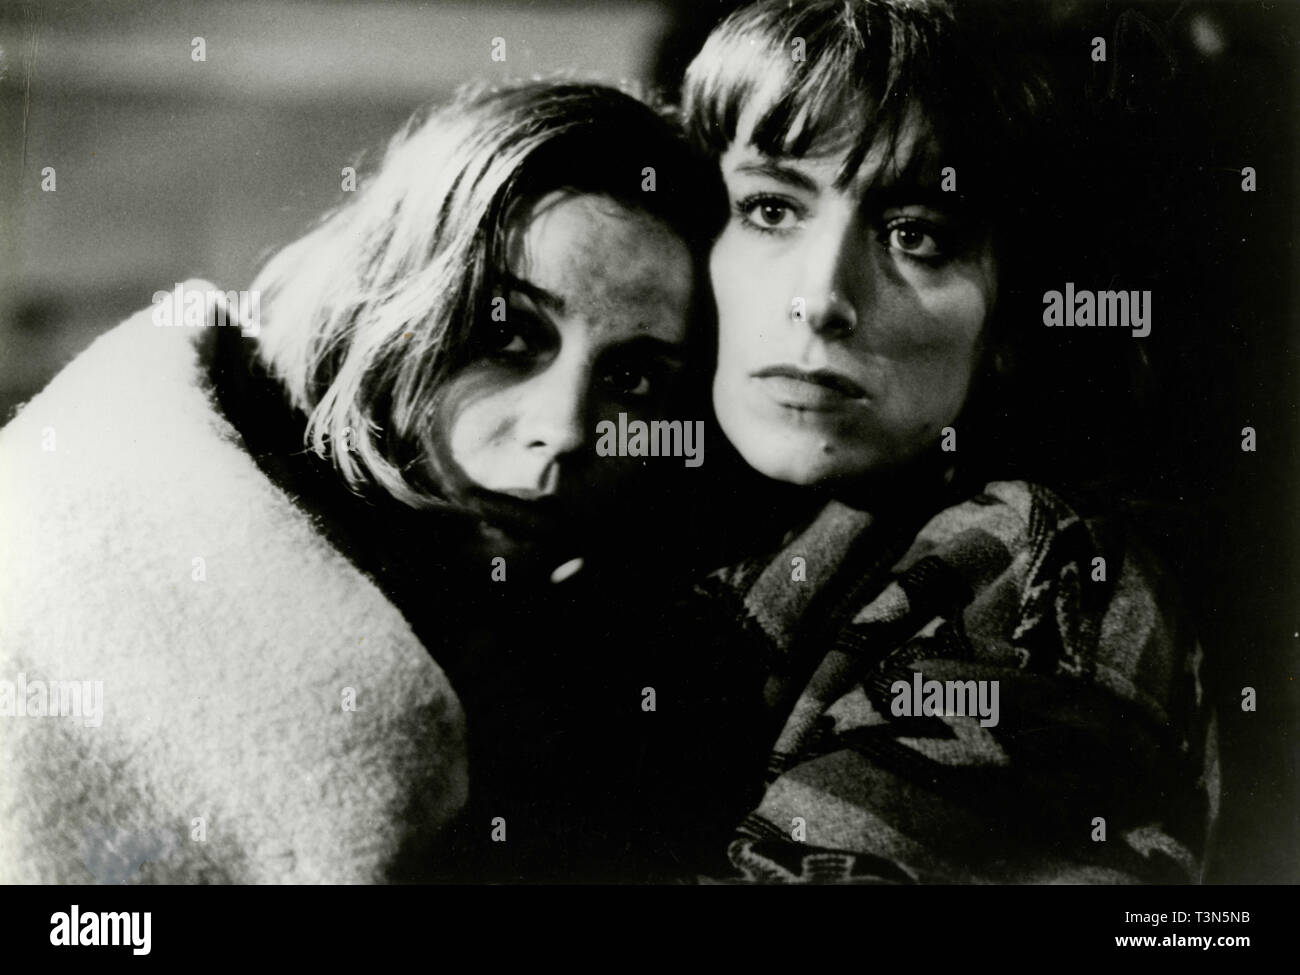 Fay Ripley e Marina Zudina nel film muto testimone, 1995 Foto Stock